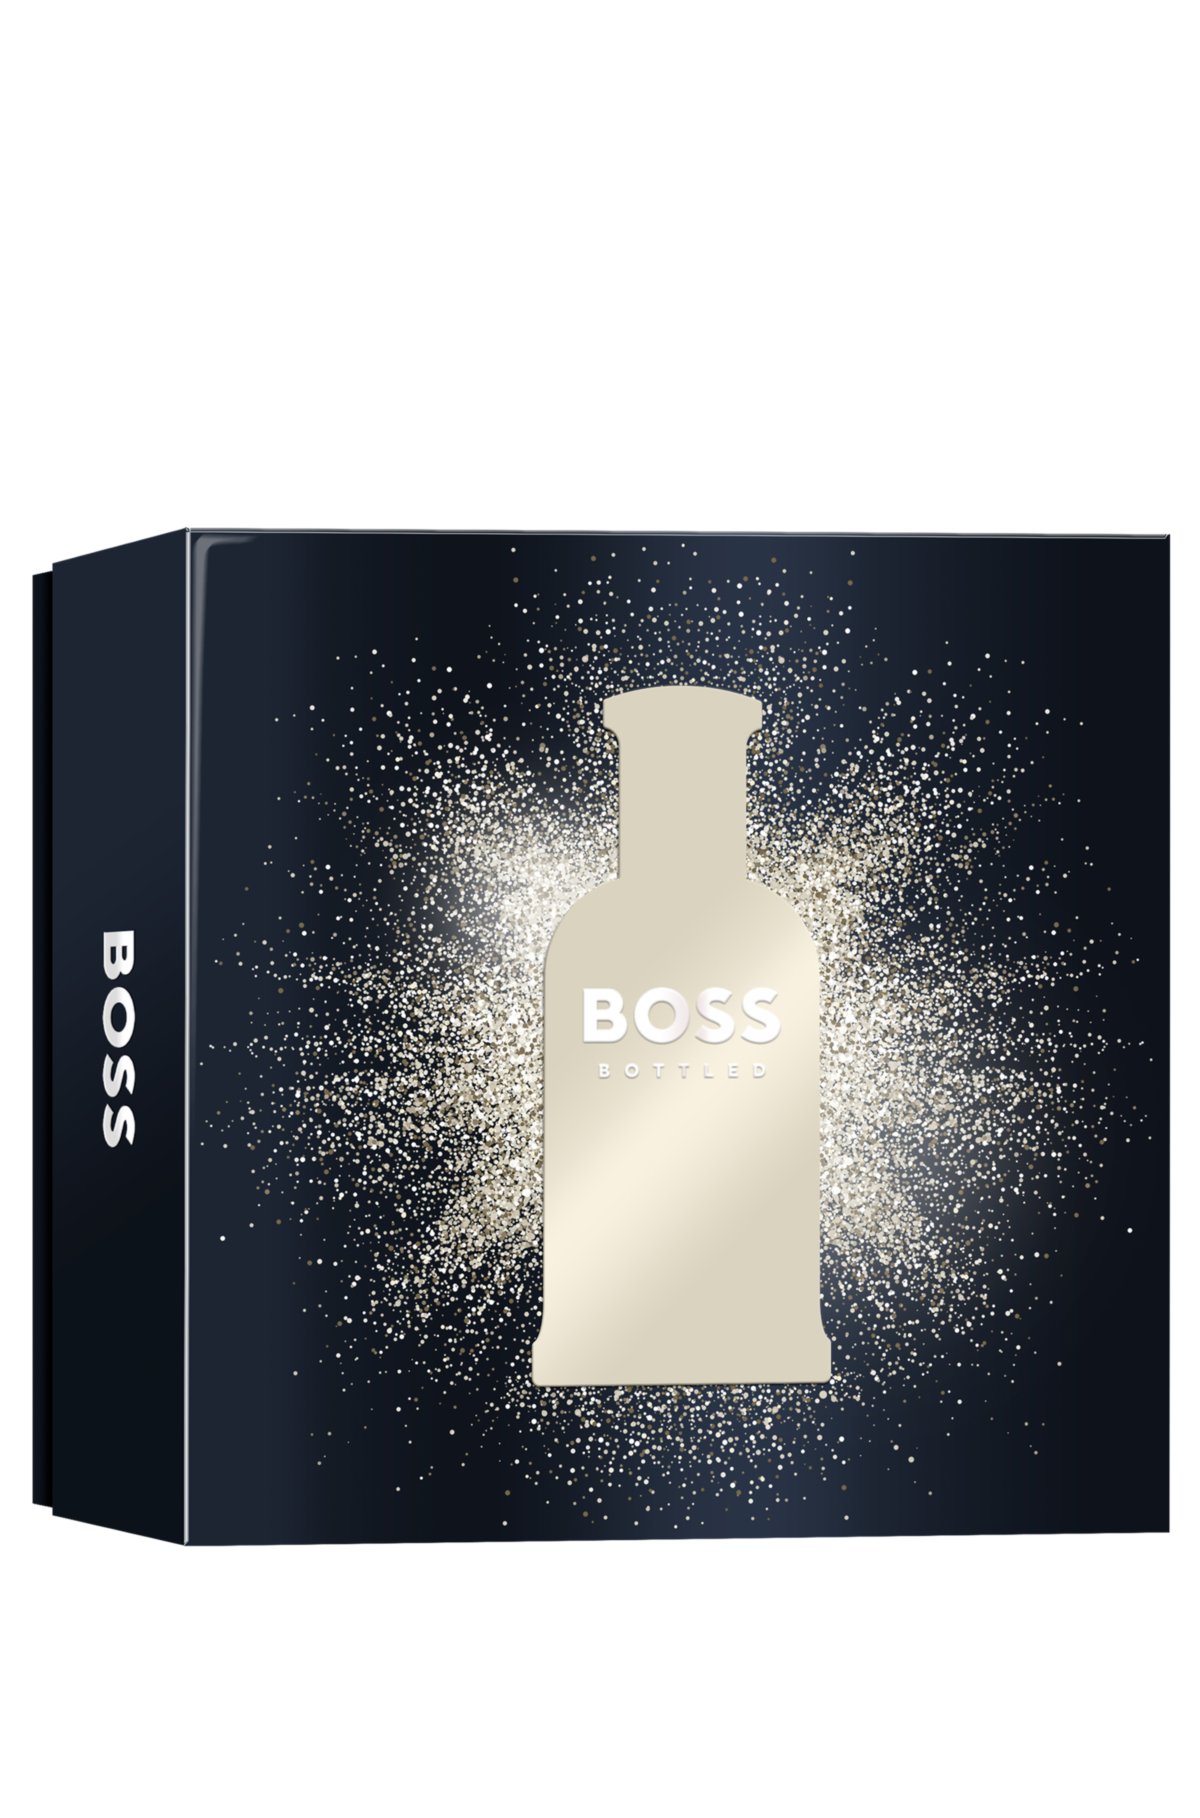 BOSS Bottled eau de toilette gift set, Assorted-Pre-Pack